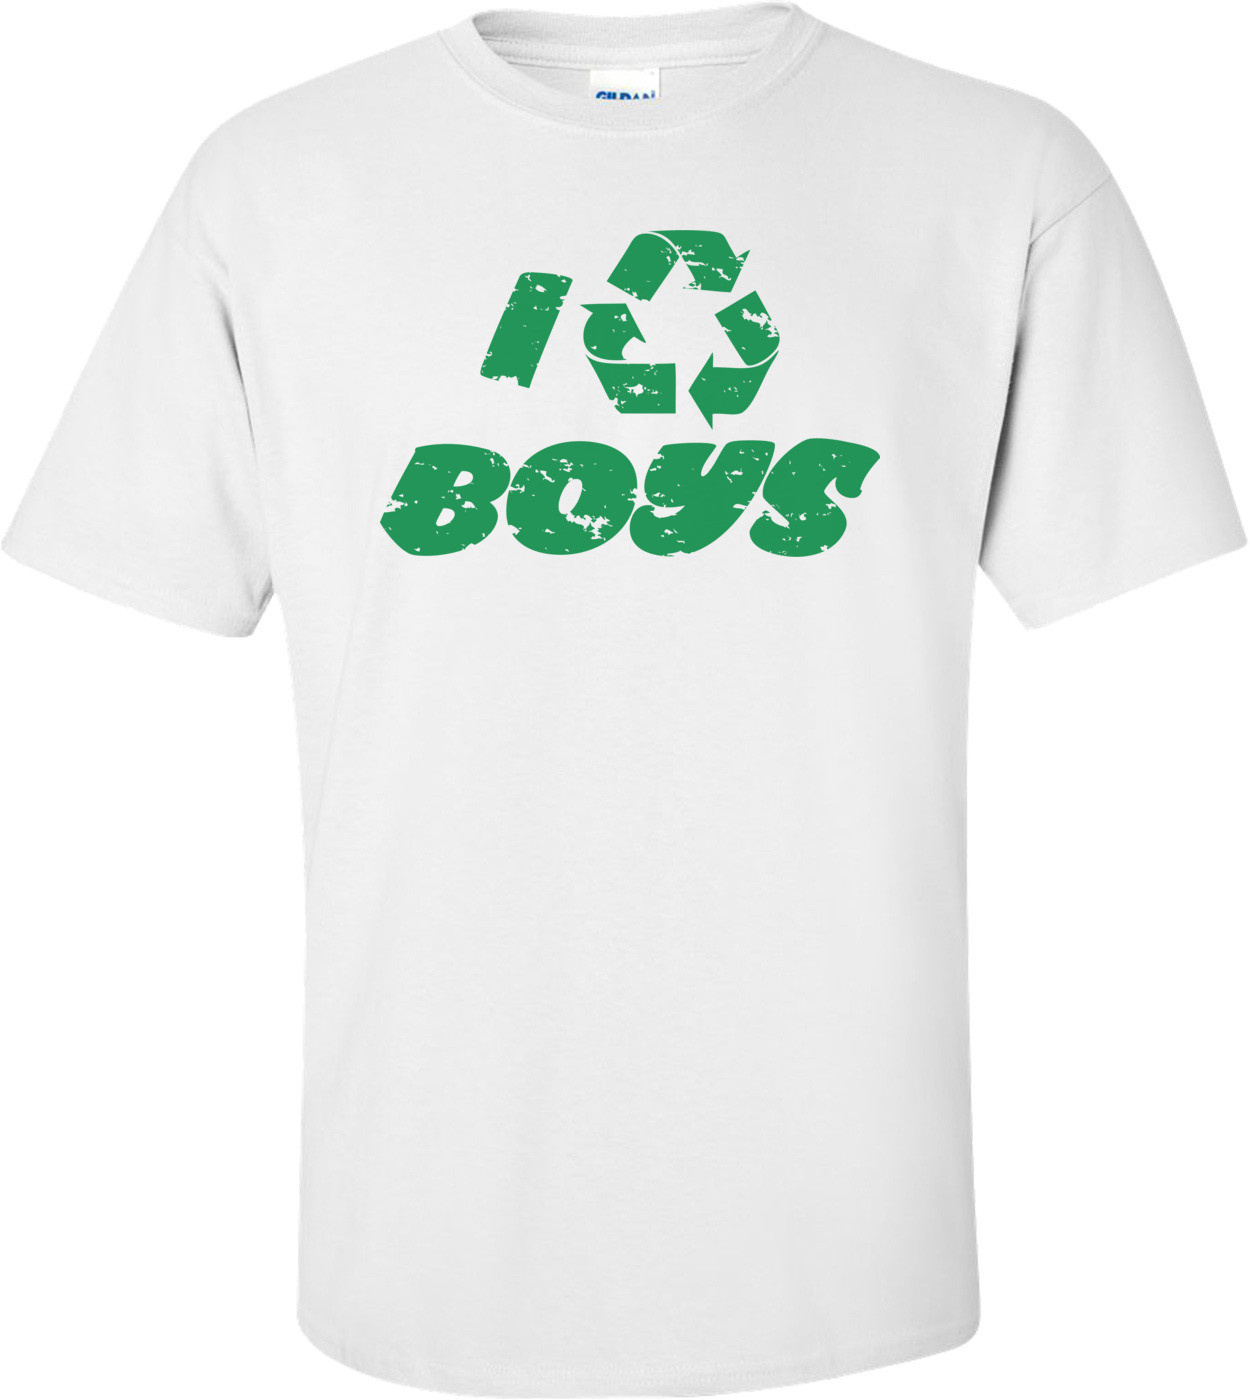 I Recycle Boys T-shirt